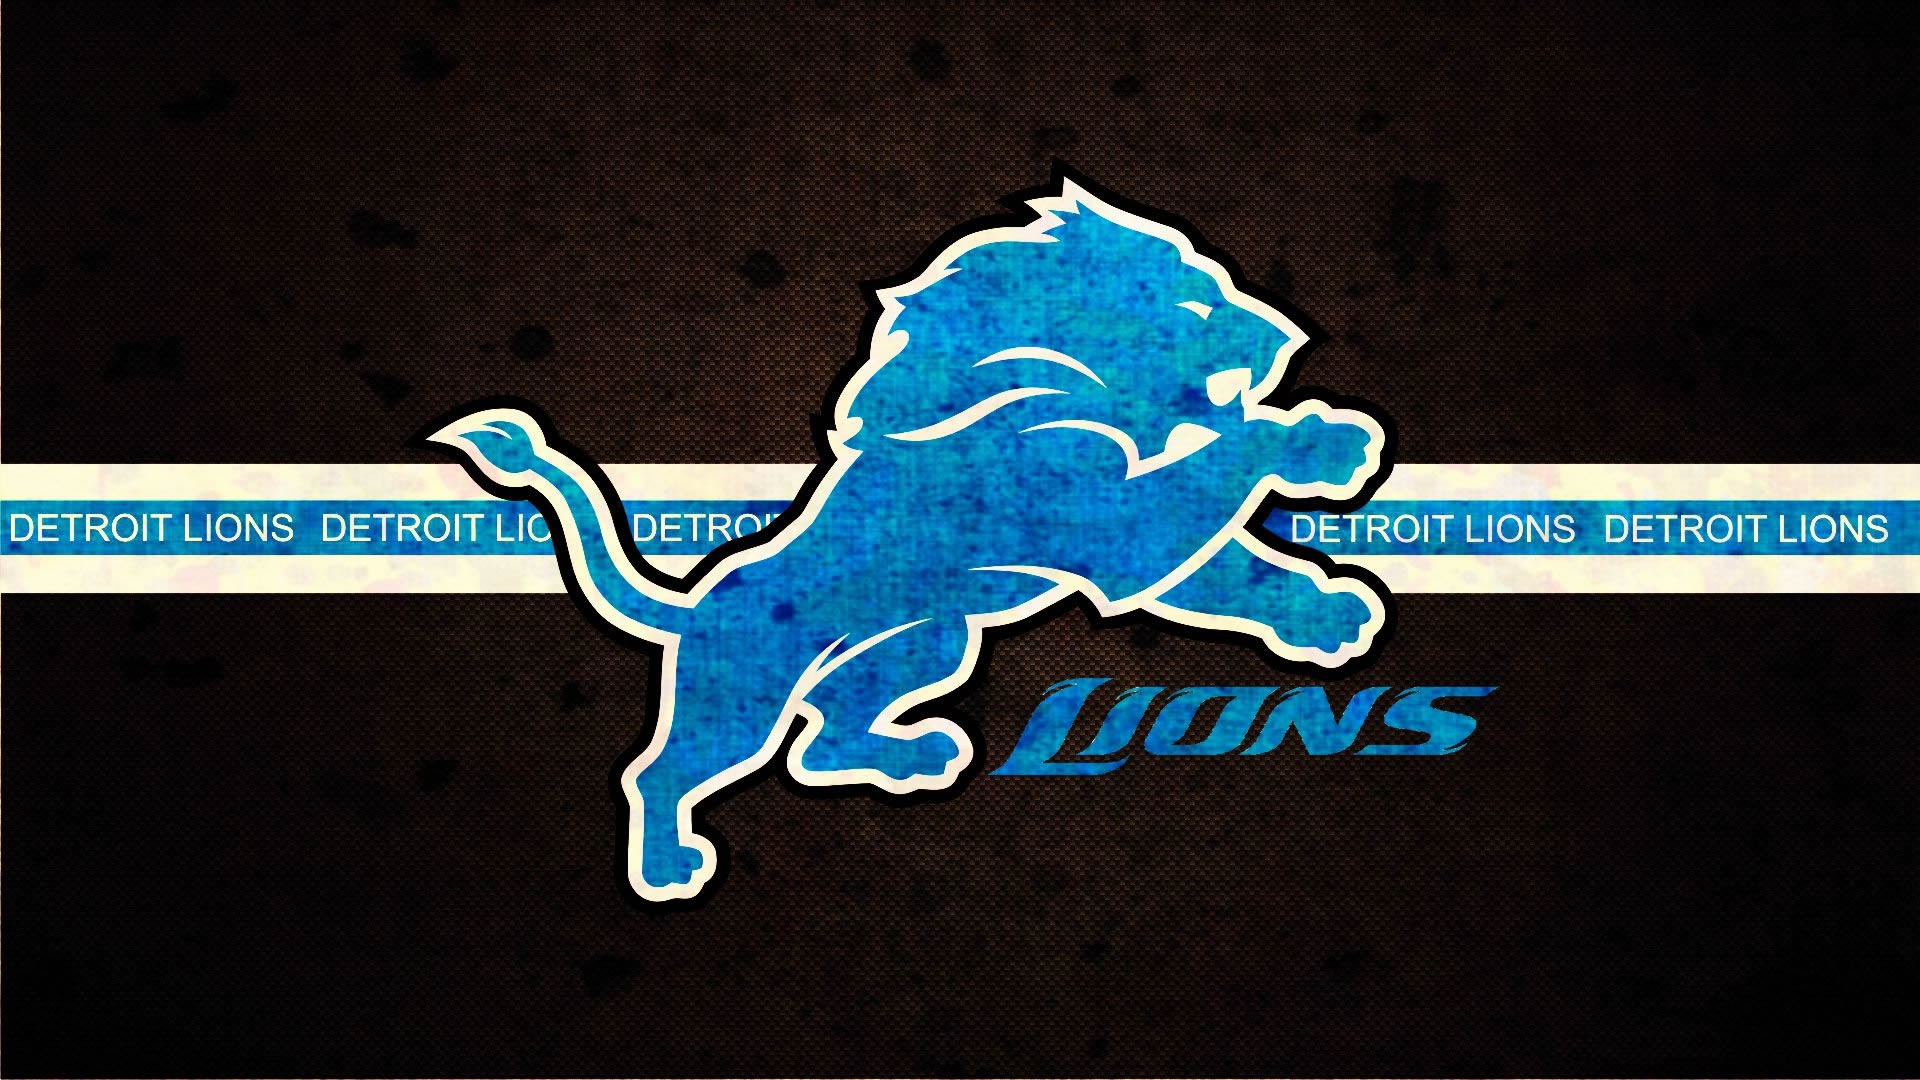 General 1920x1080 Detroit Lions American football NFL logo